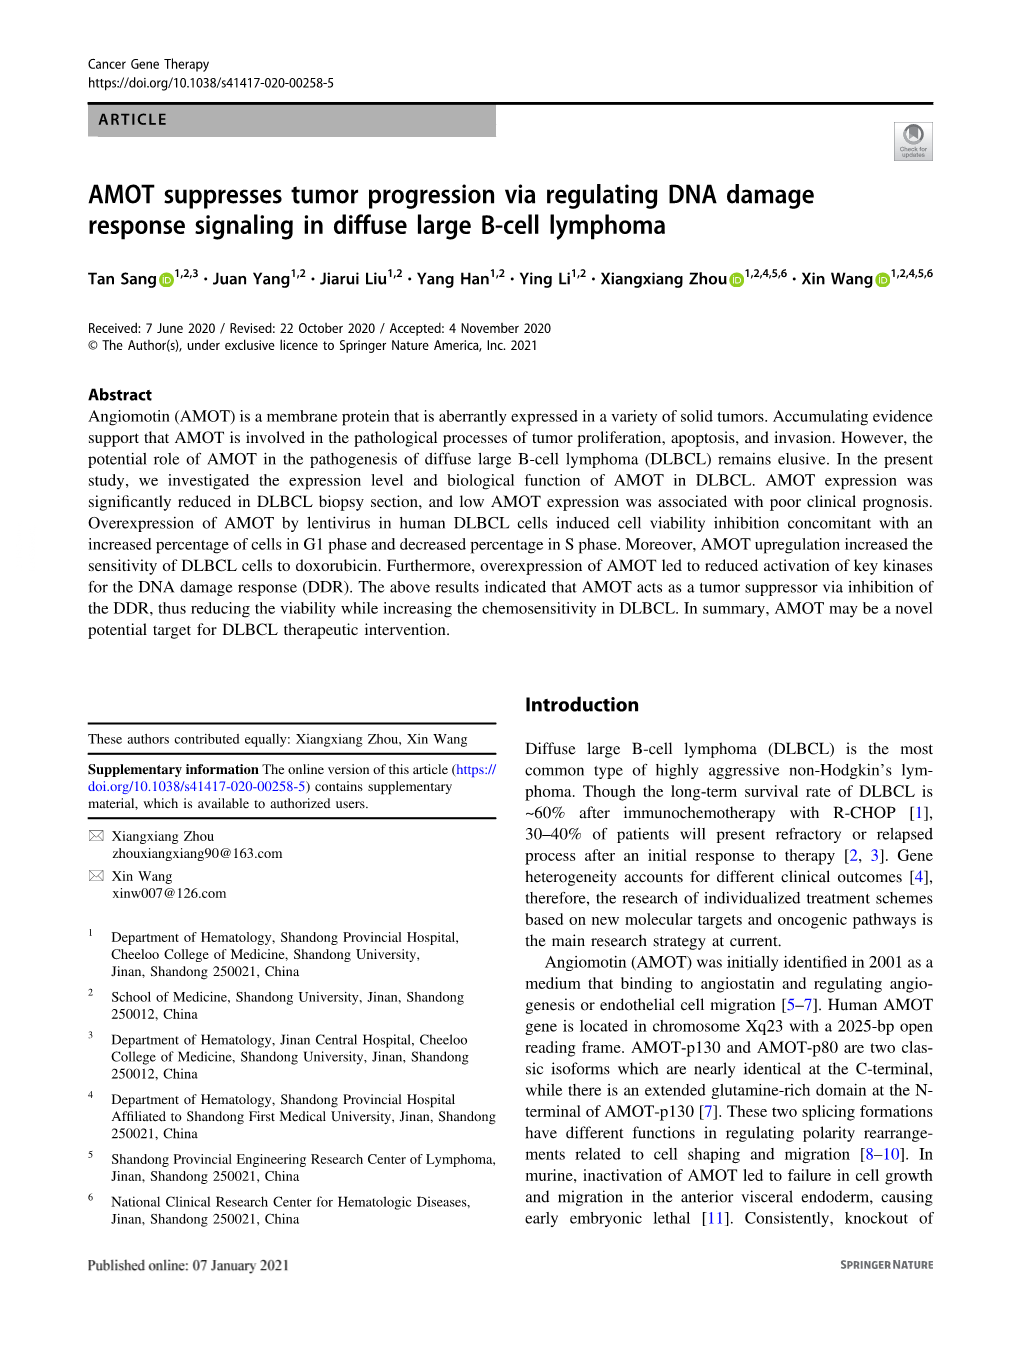 AMOT Suppresses Tumor Progression Via Regulating DNA Damage Response Signaling in Diffuse Large B-Cell Lymphoma